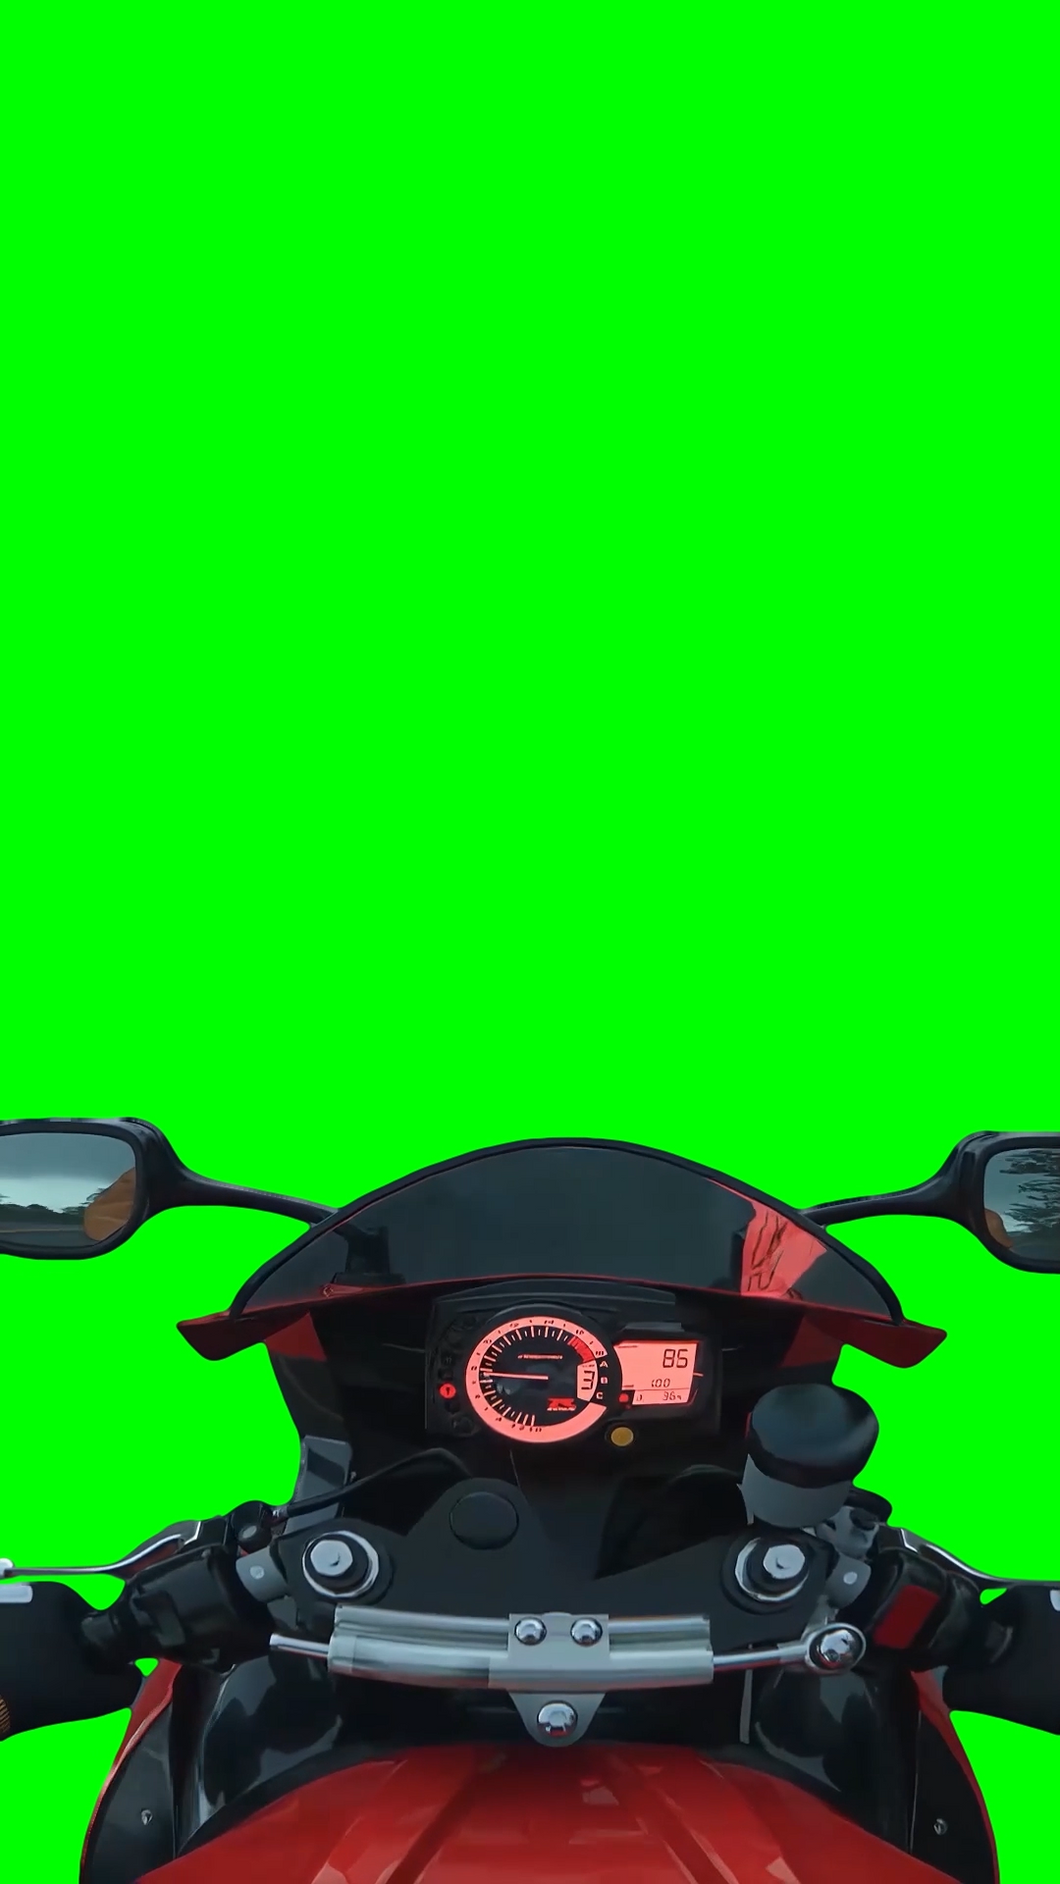 Motorcycle Crash meme (Green Screen)